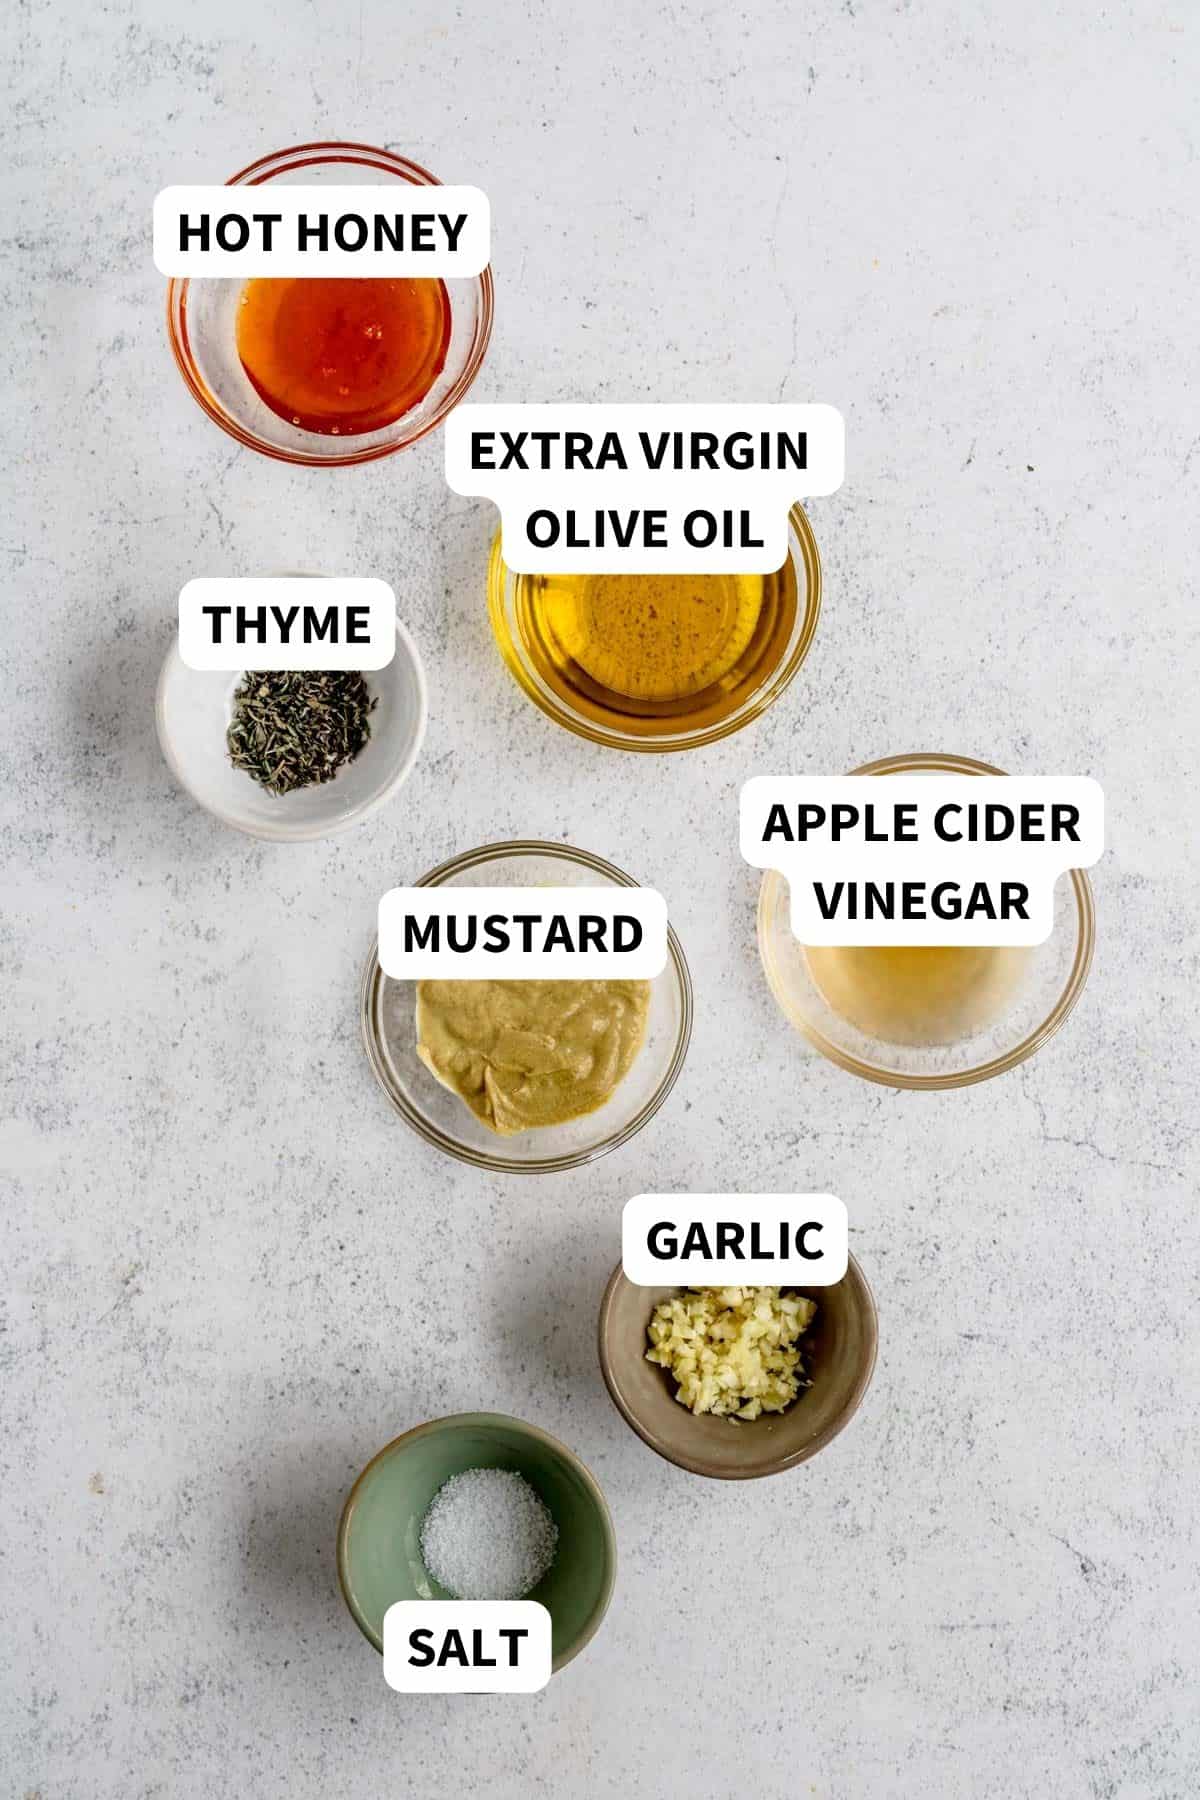 Labeled ingredients to make hot honey mustard salad dressing.